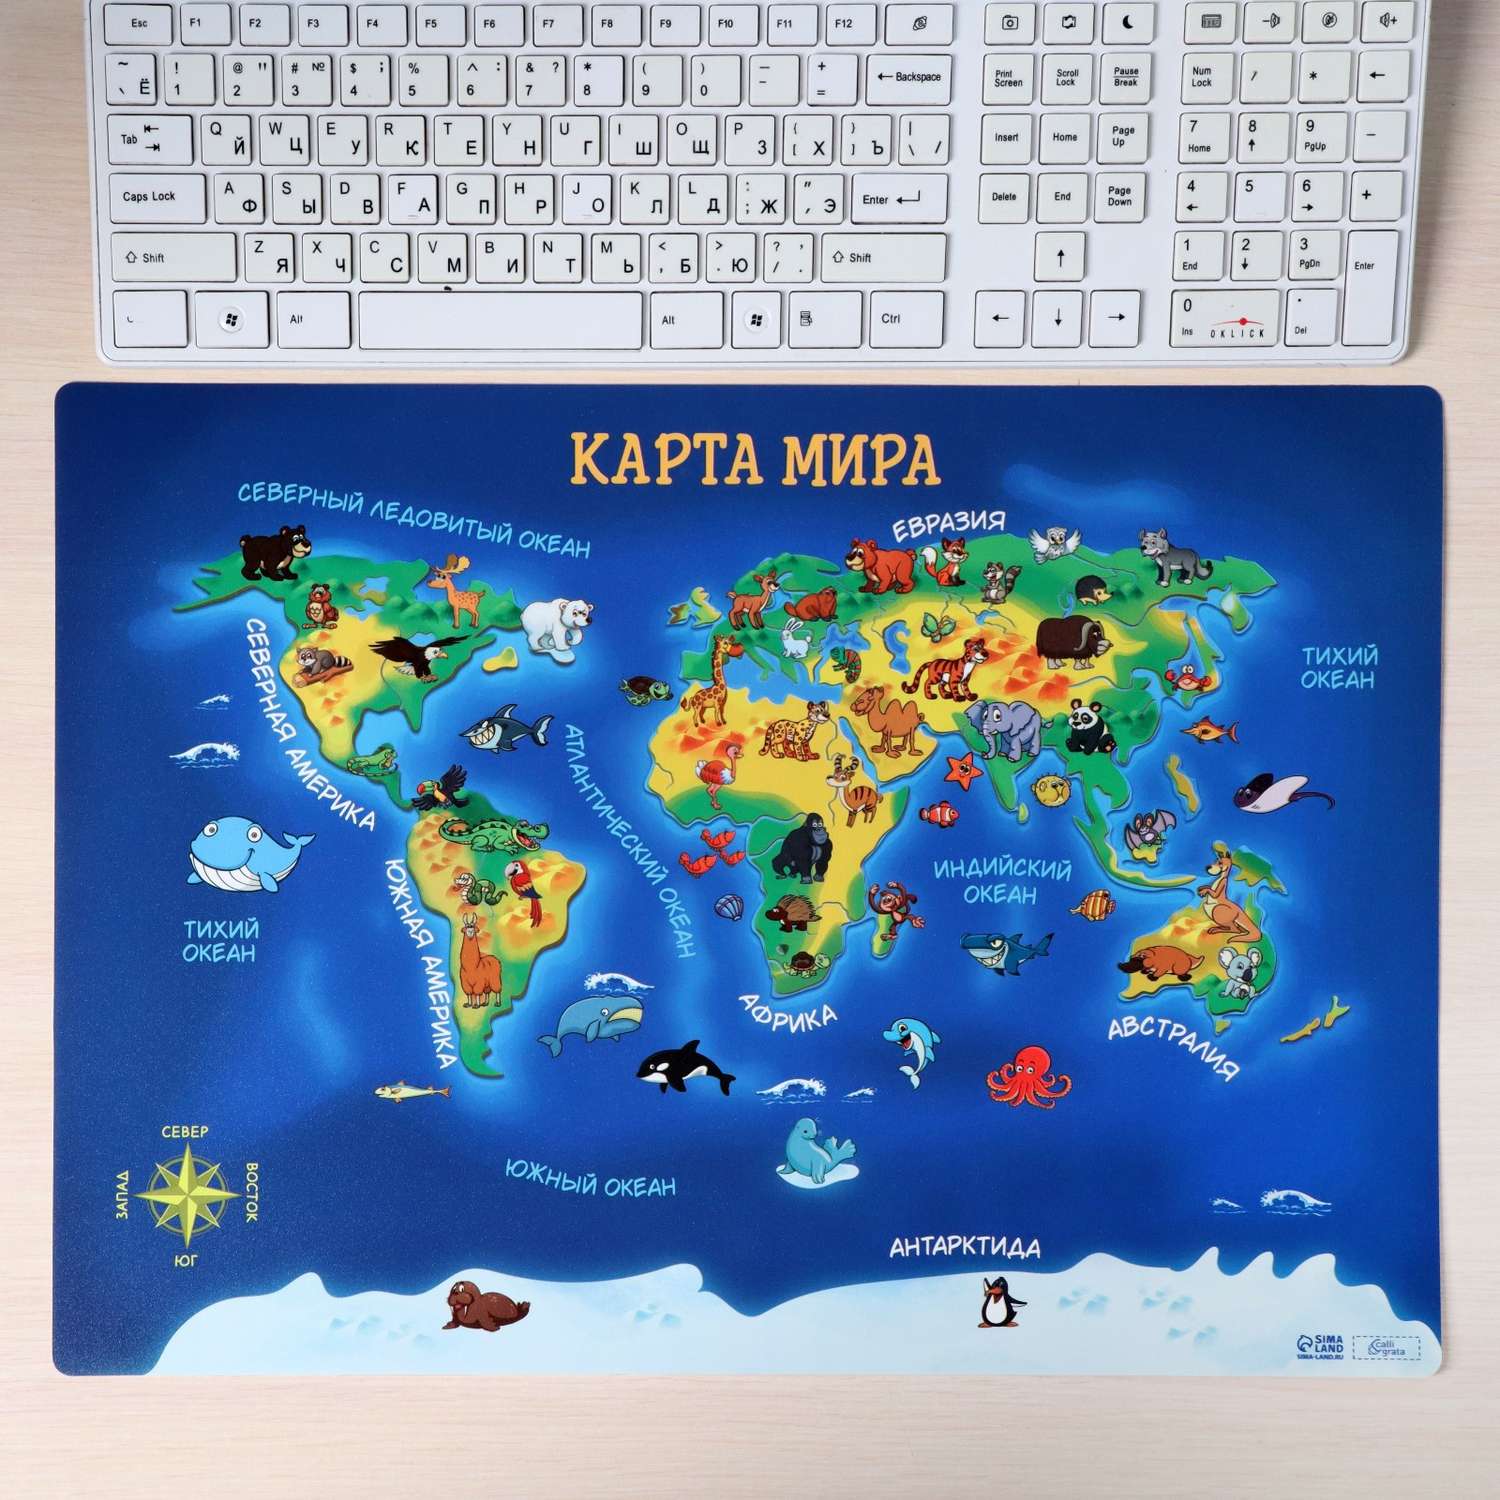 Накладка на стол Calligrata пластиковая А3 460 х 330 мм «Карта мира» 430 мкм обучающая - фото 3